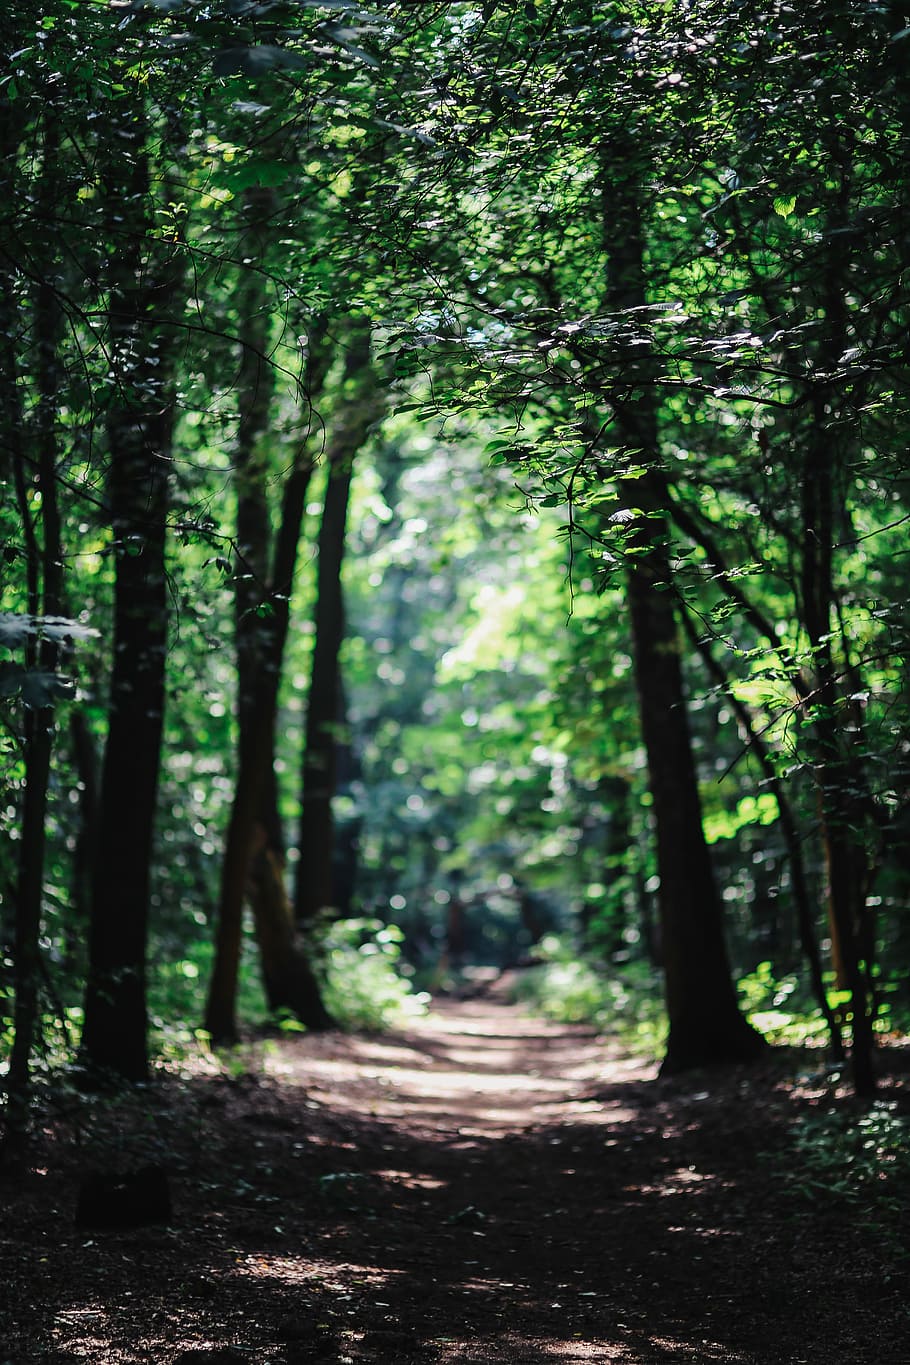 caminar, bosque laberinto, bosque, laberinto, verano, verde, naturaleza, madera, maderas, árbol